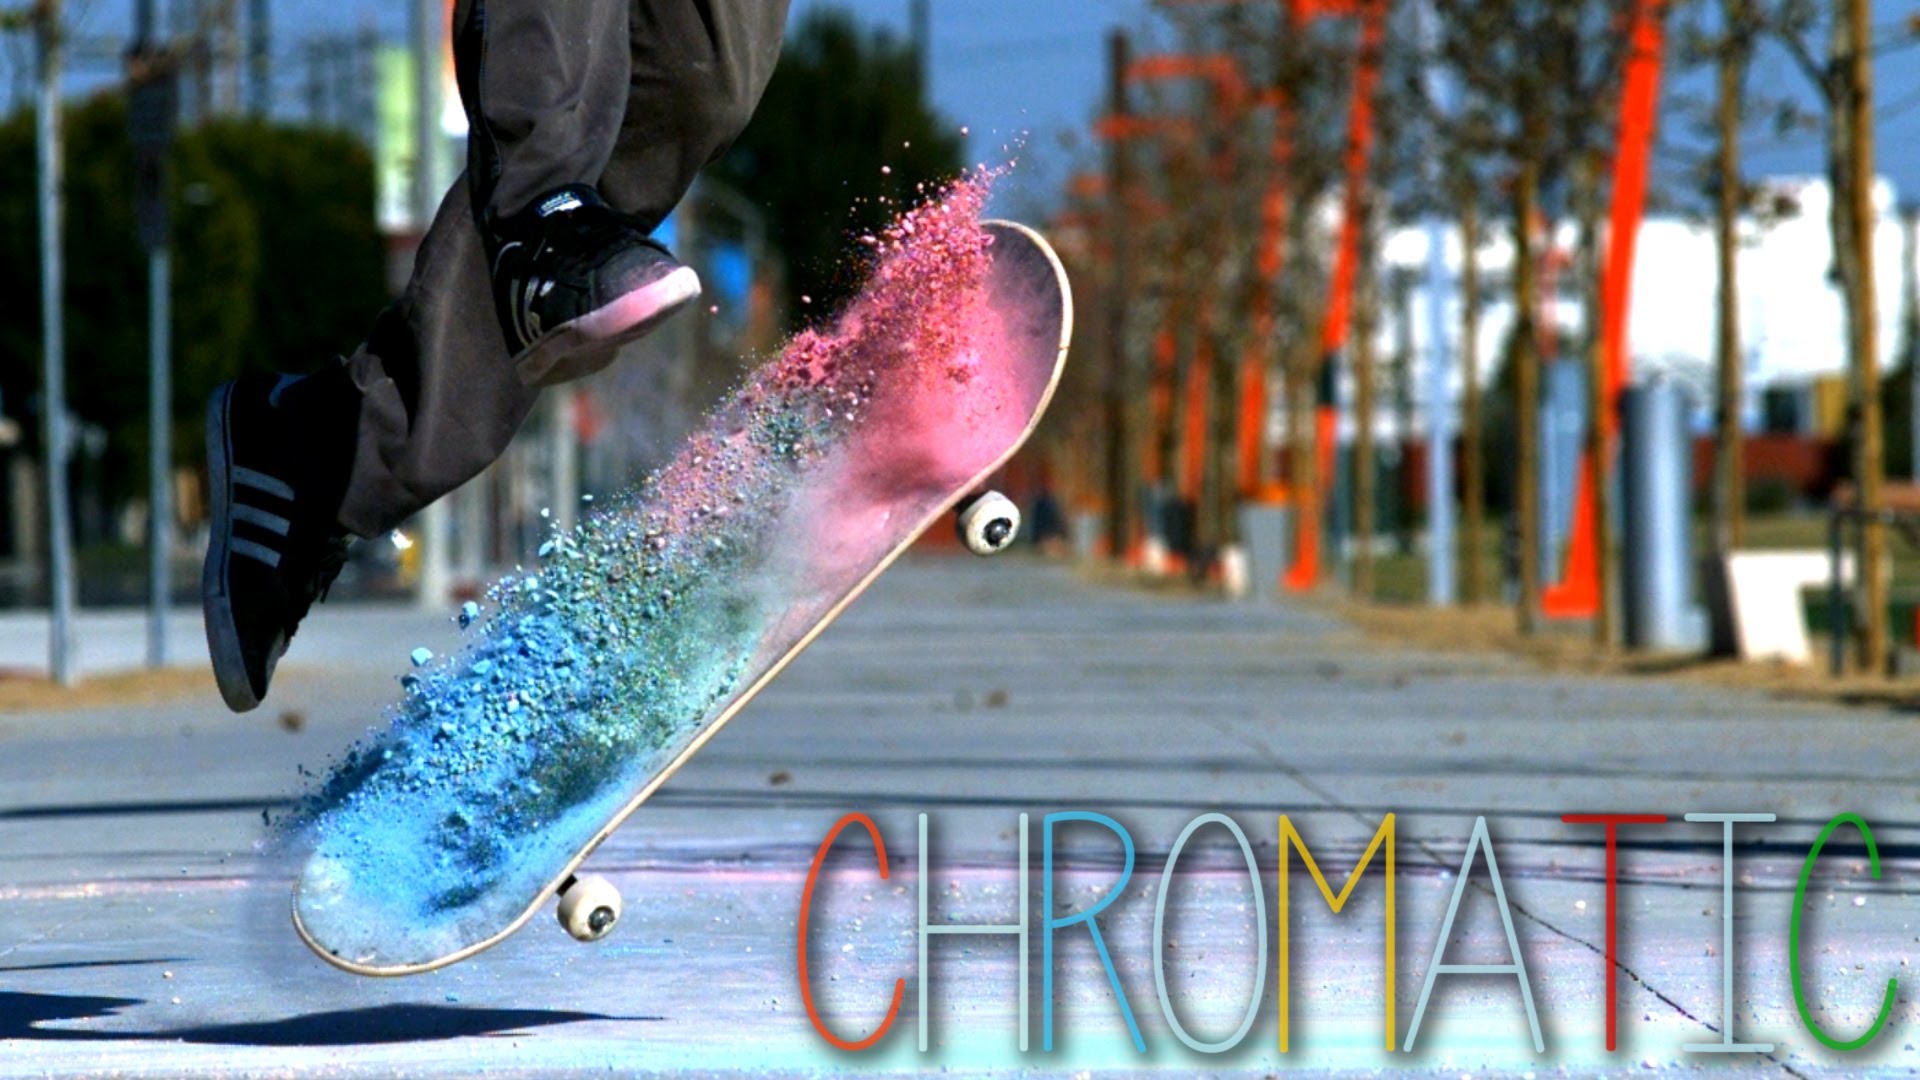 Chromatic: Skating in Slow Motion mit Kreide